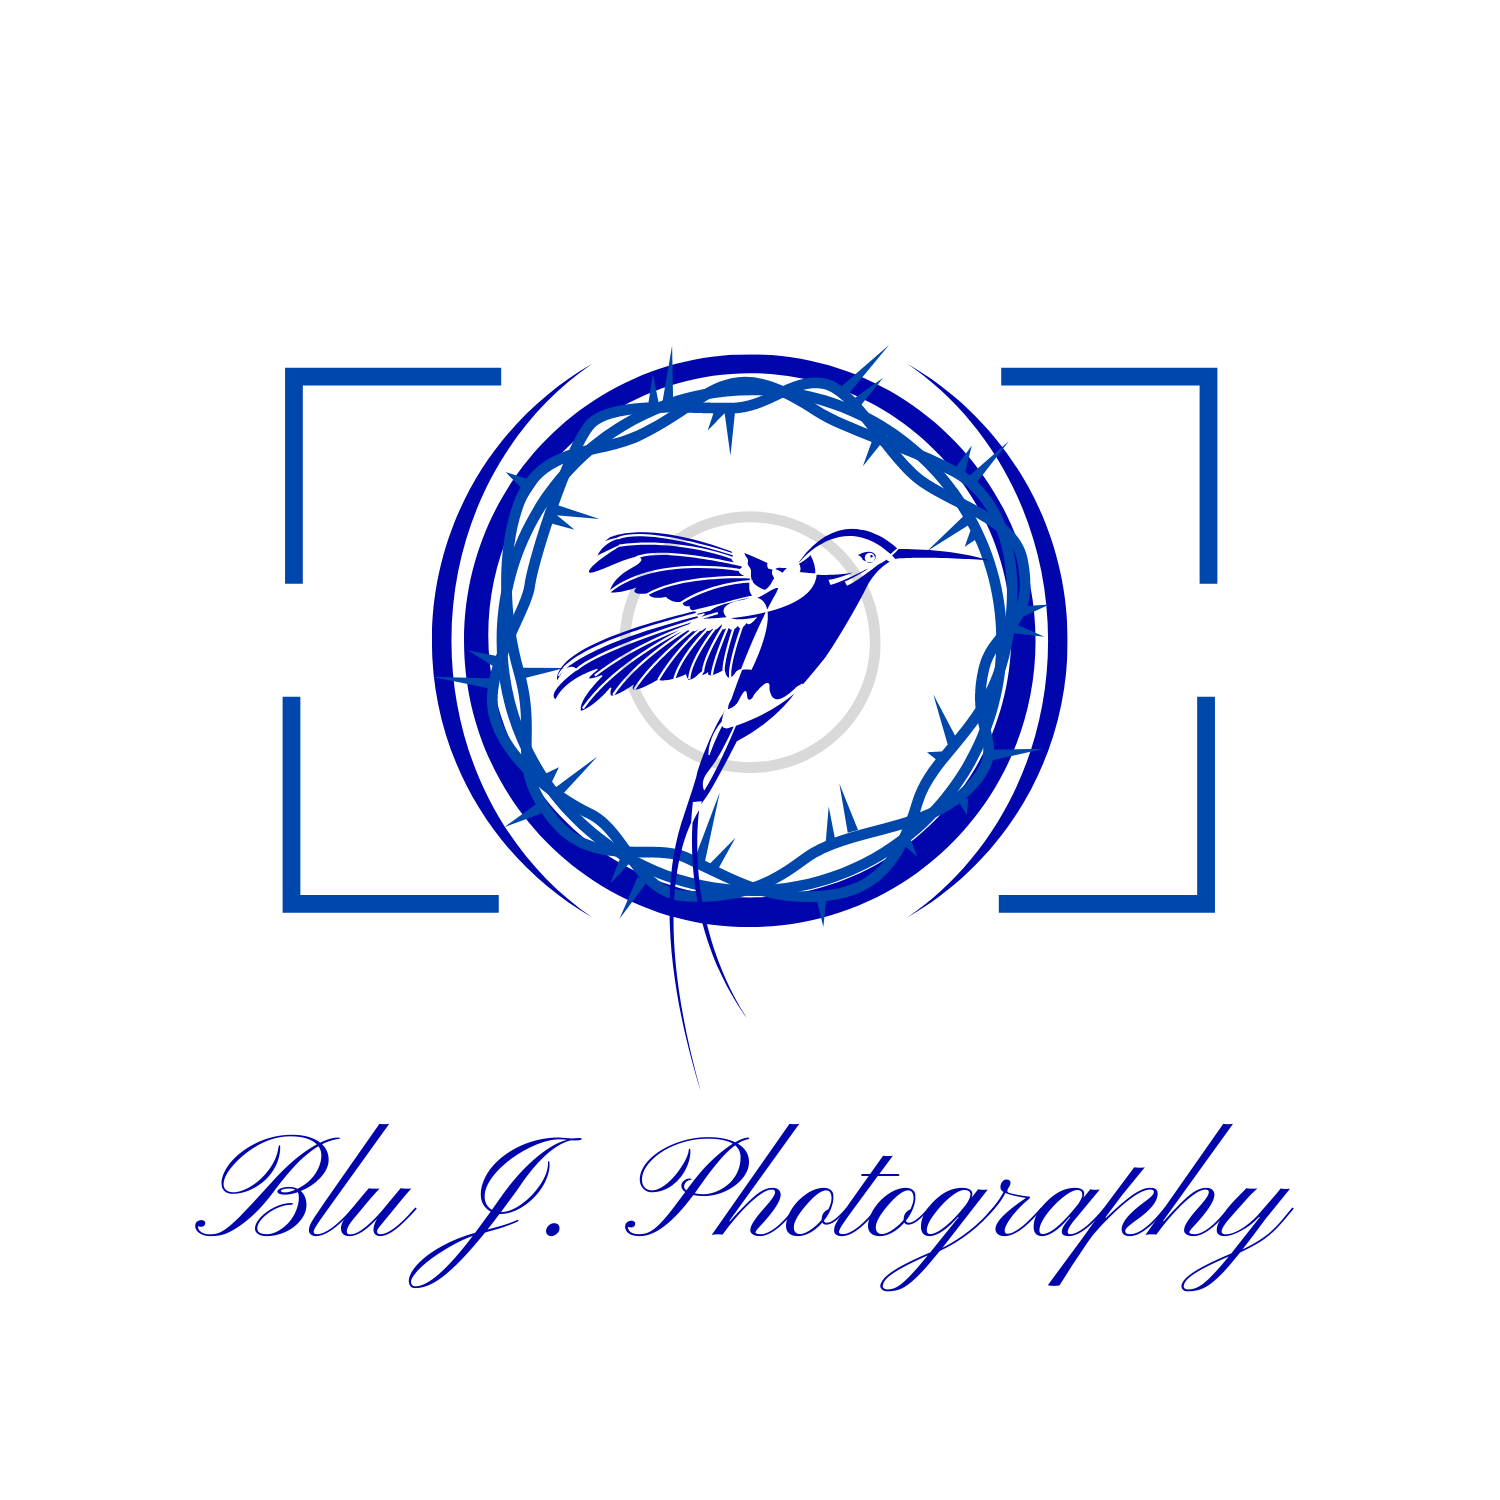 Blu J. Photography